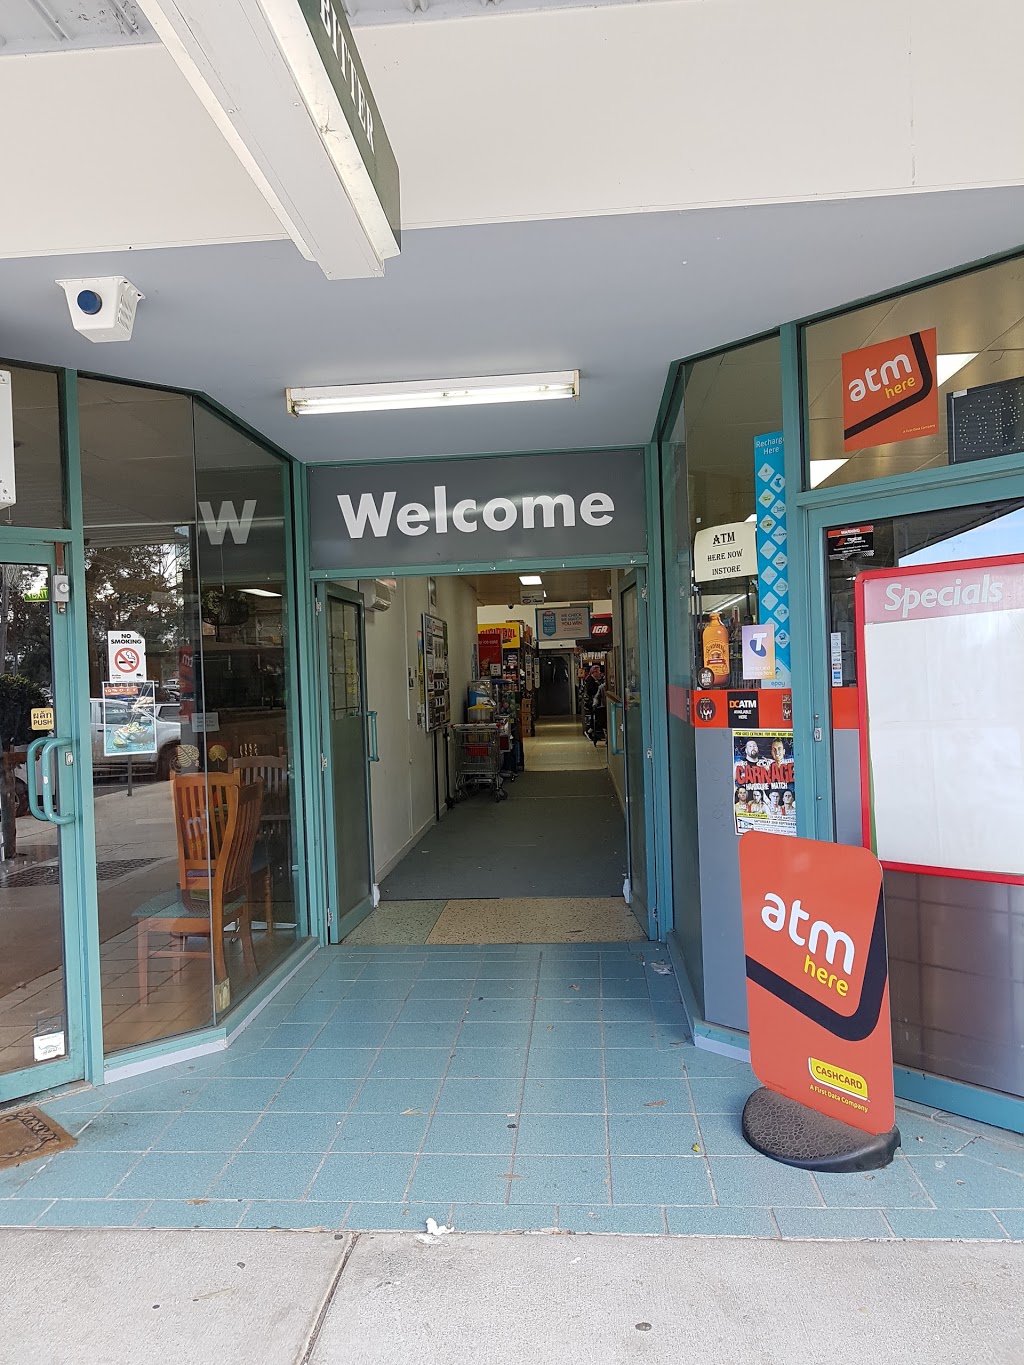 Ferntree Gully IGA | supermarket | 107 Station St, Ferntree Gully VIC 3156, Australia | 0397523999 OR +61 3 9752 3999